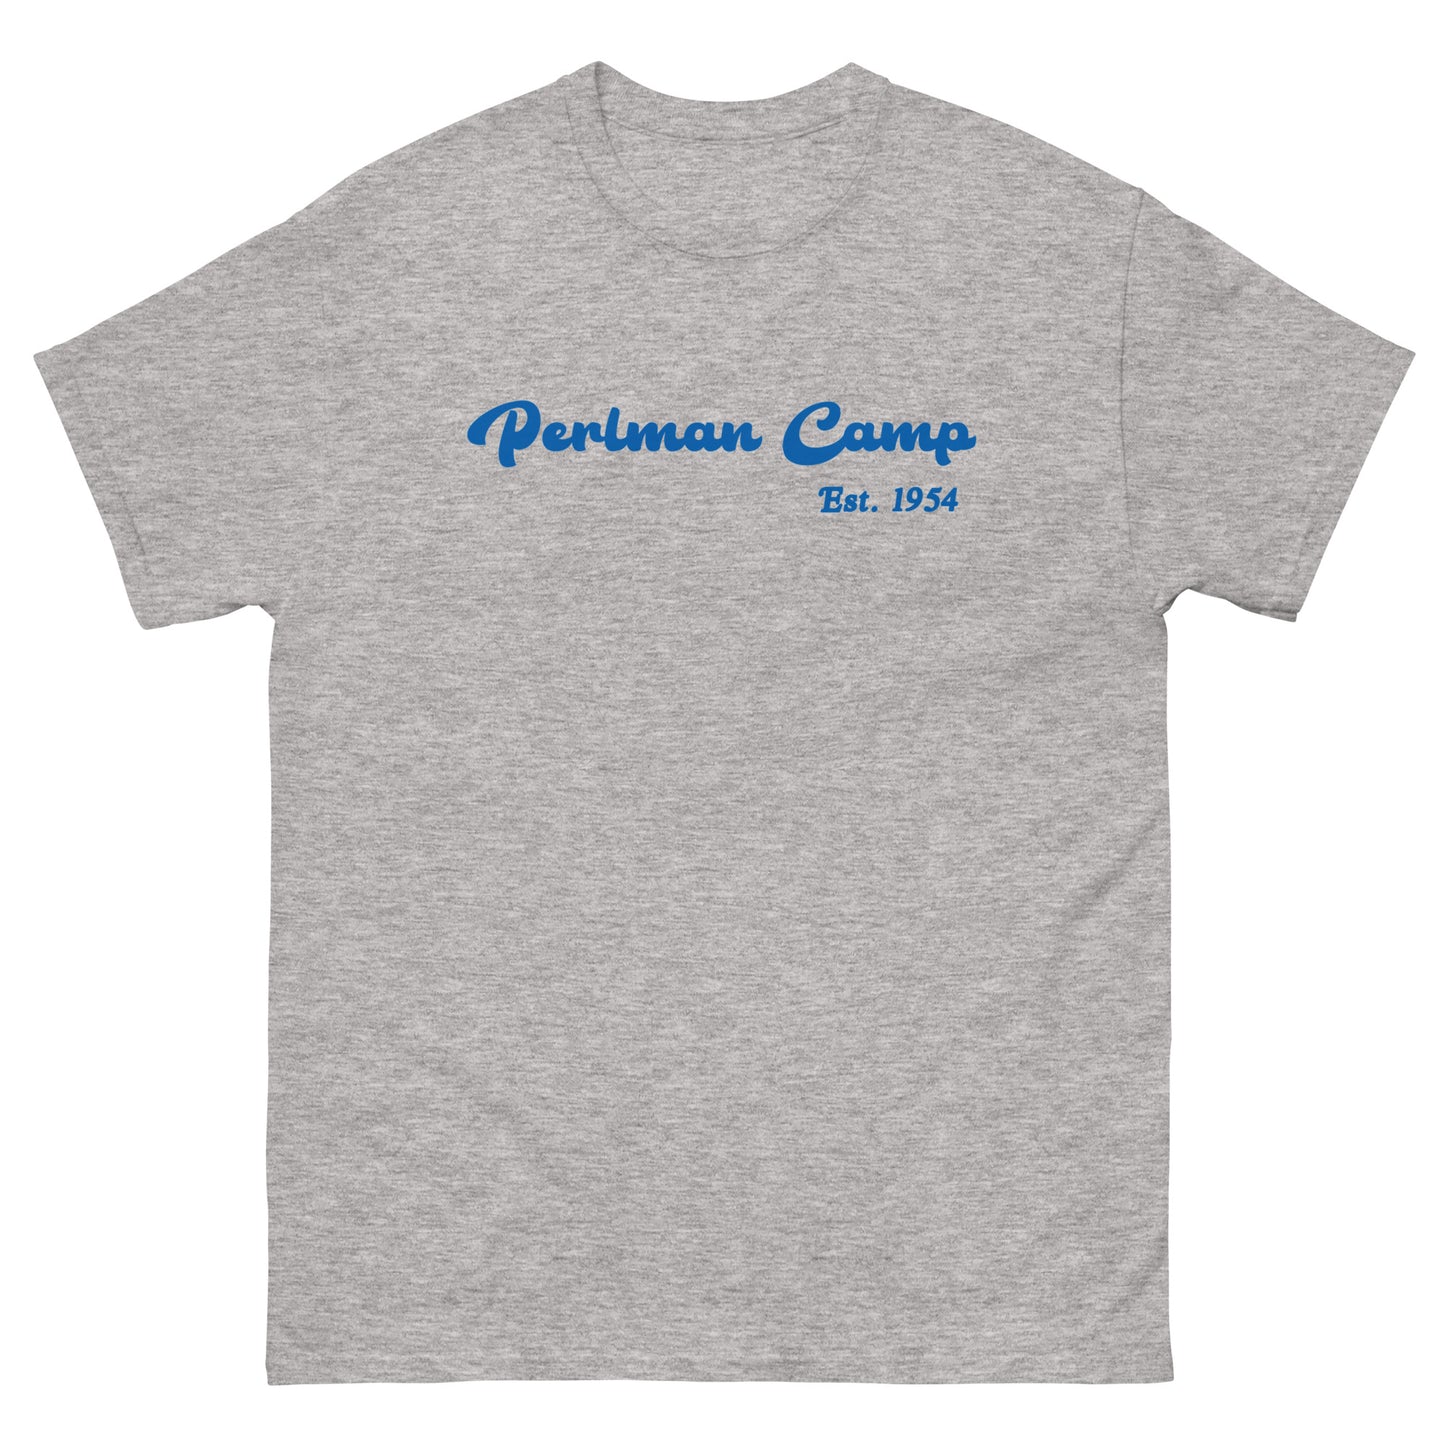 Perlman Camp classic tee